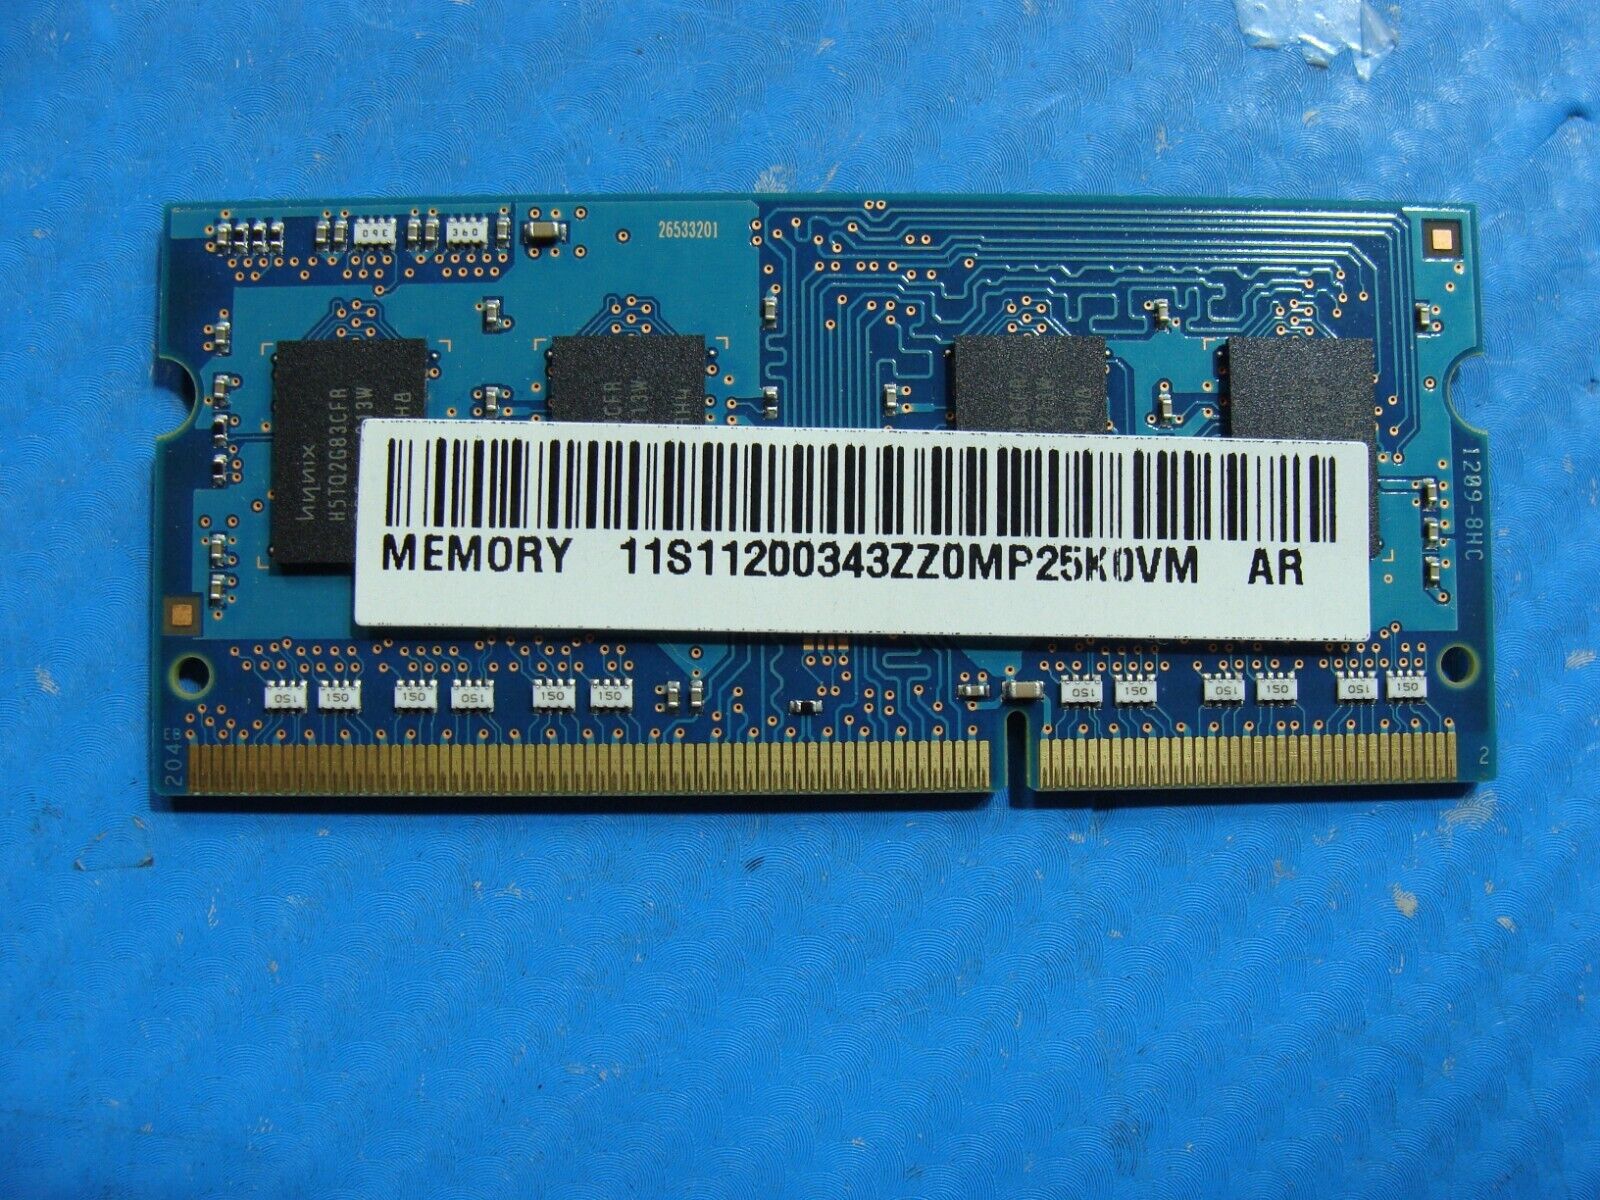 Lenovo P580 Hynix 2GB 1Rx8 PC3-12800S Memory RAM SO-DIMM HMT325S6CFR8C-PB